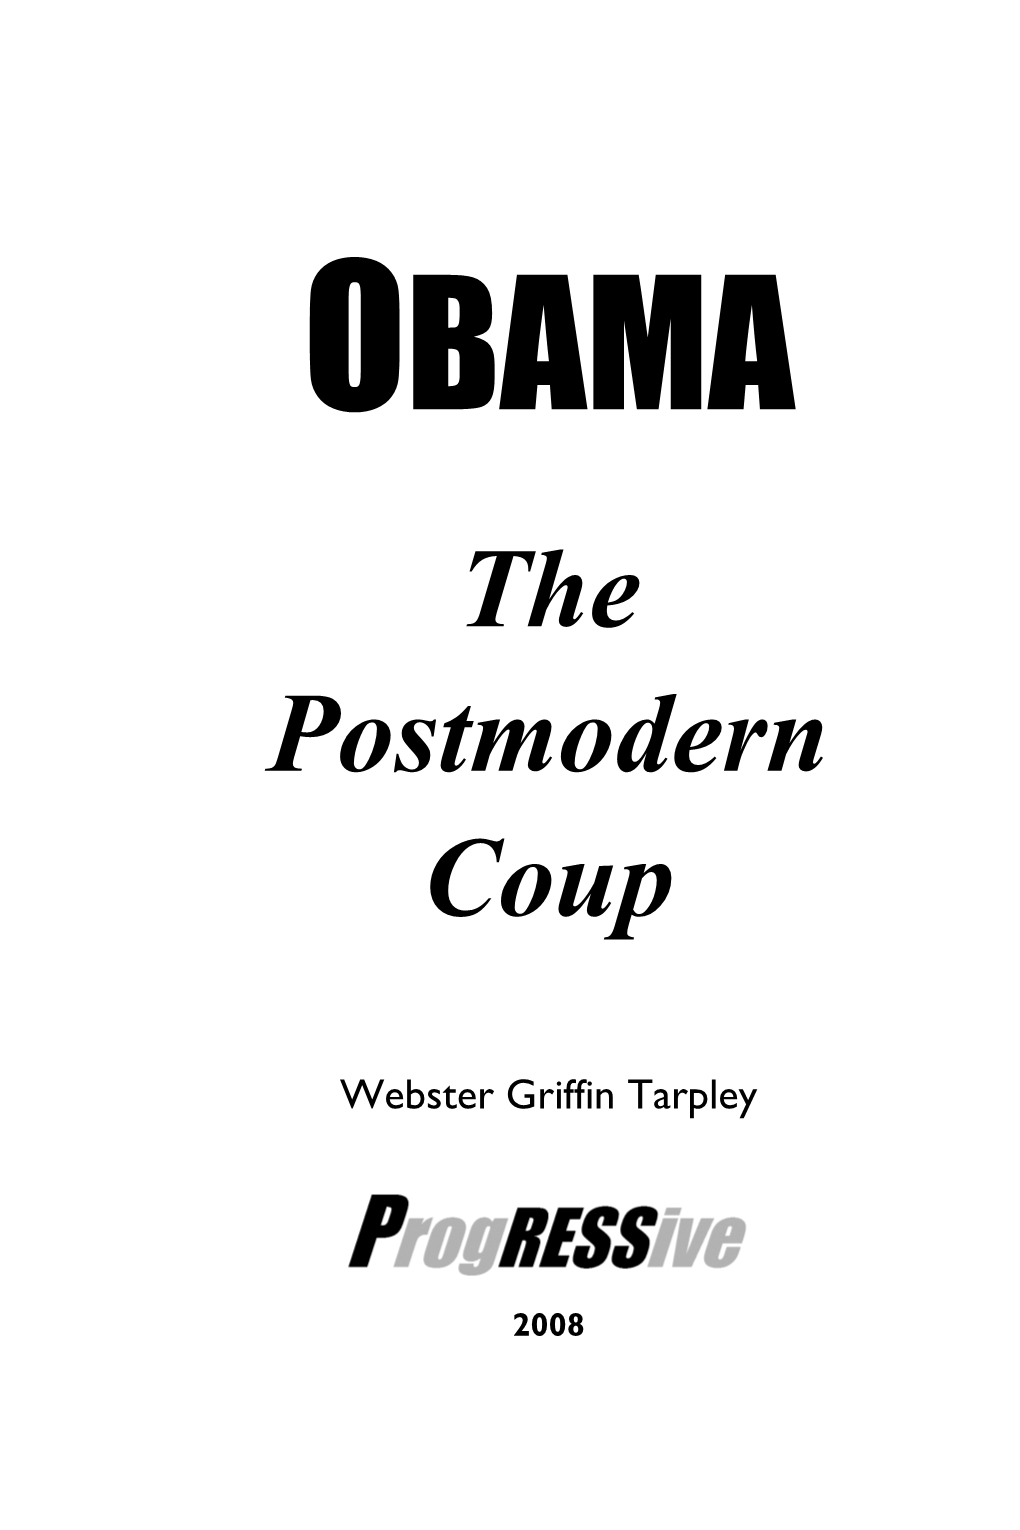 OBAMA the Postmodern Coup